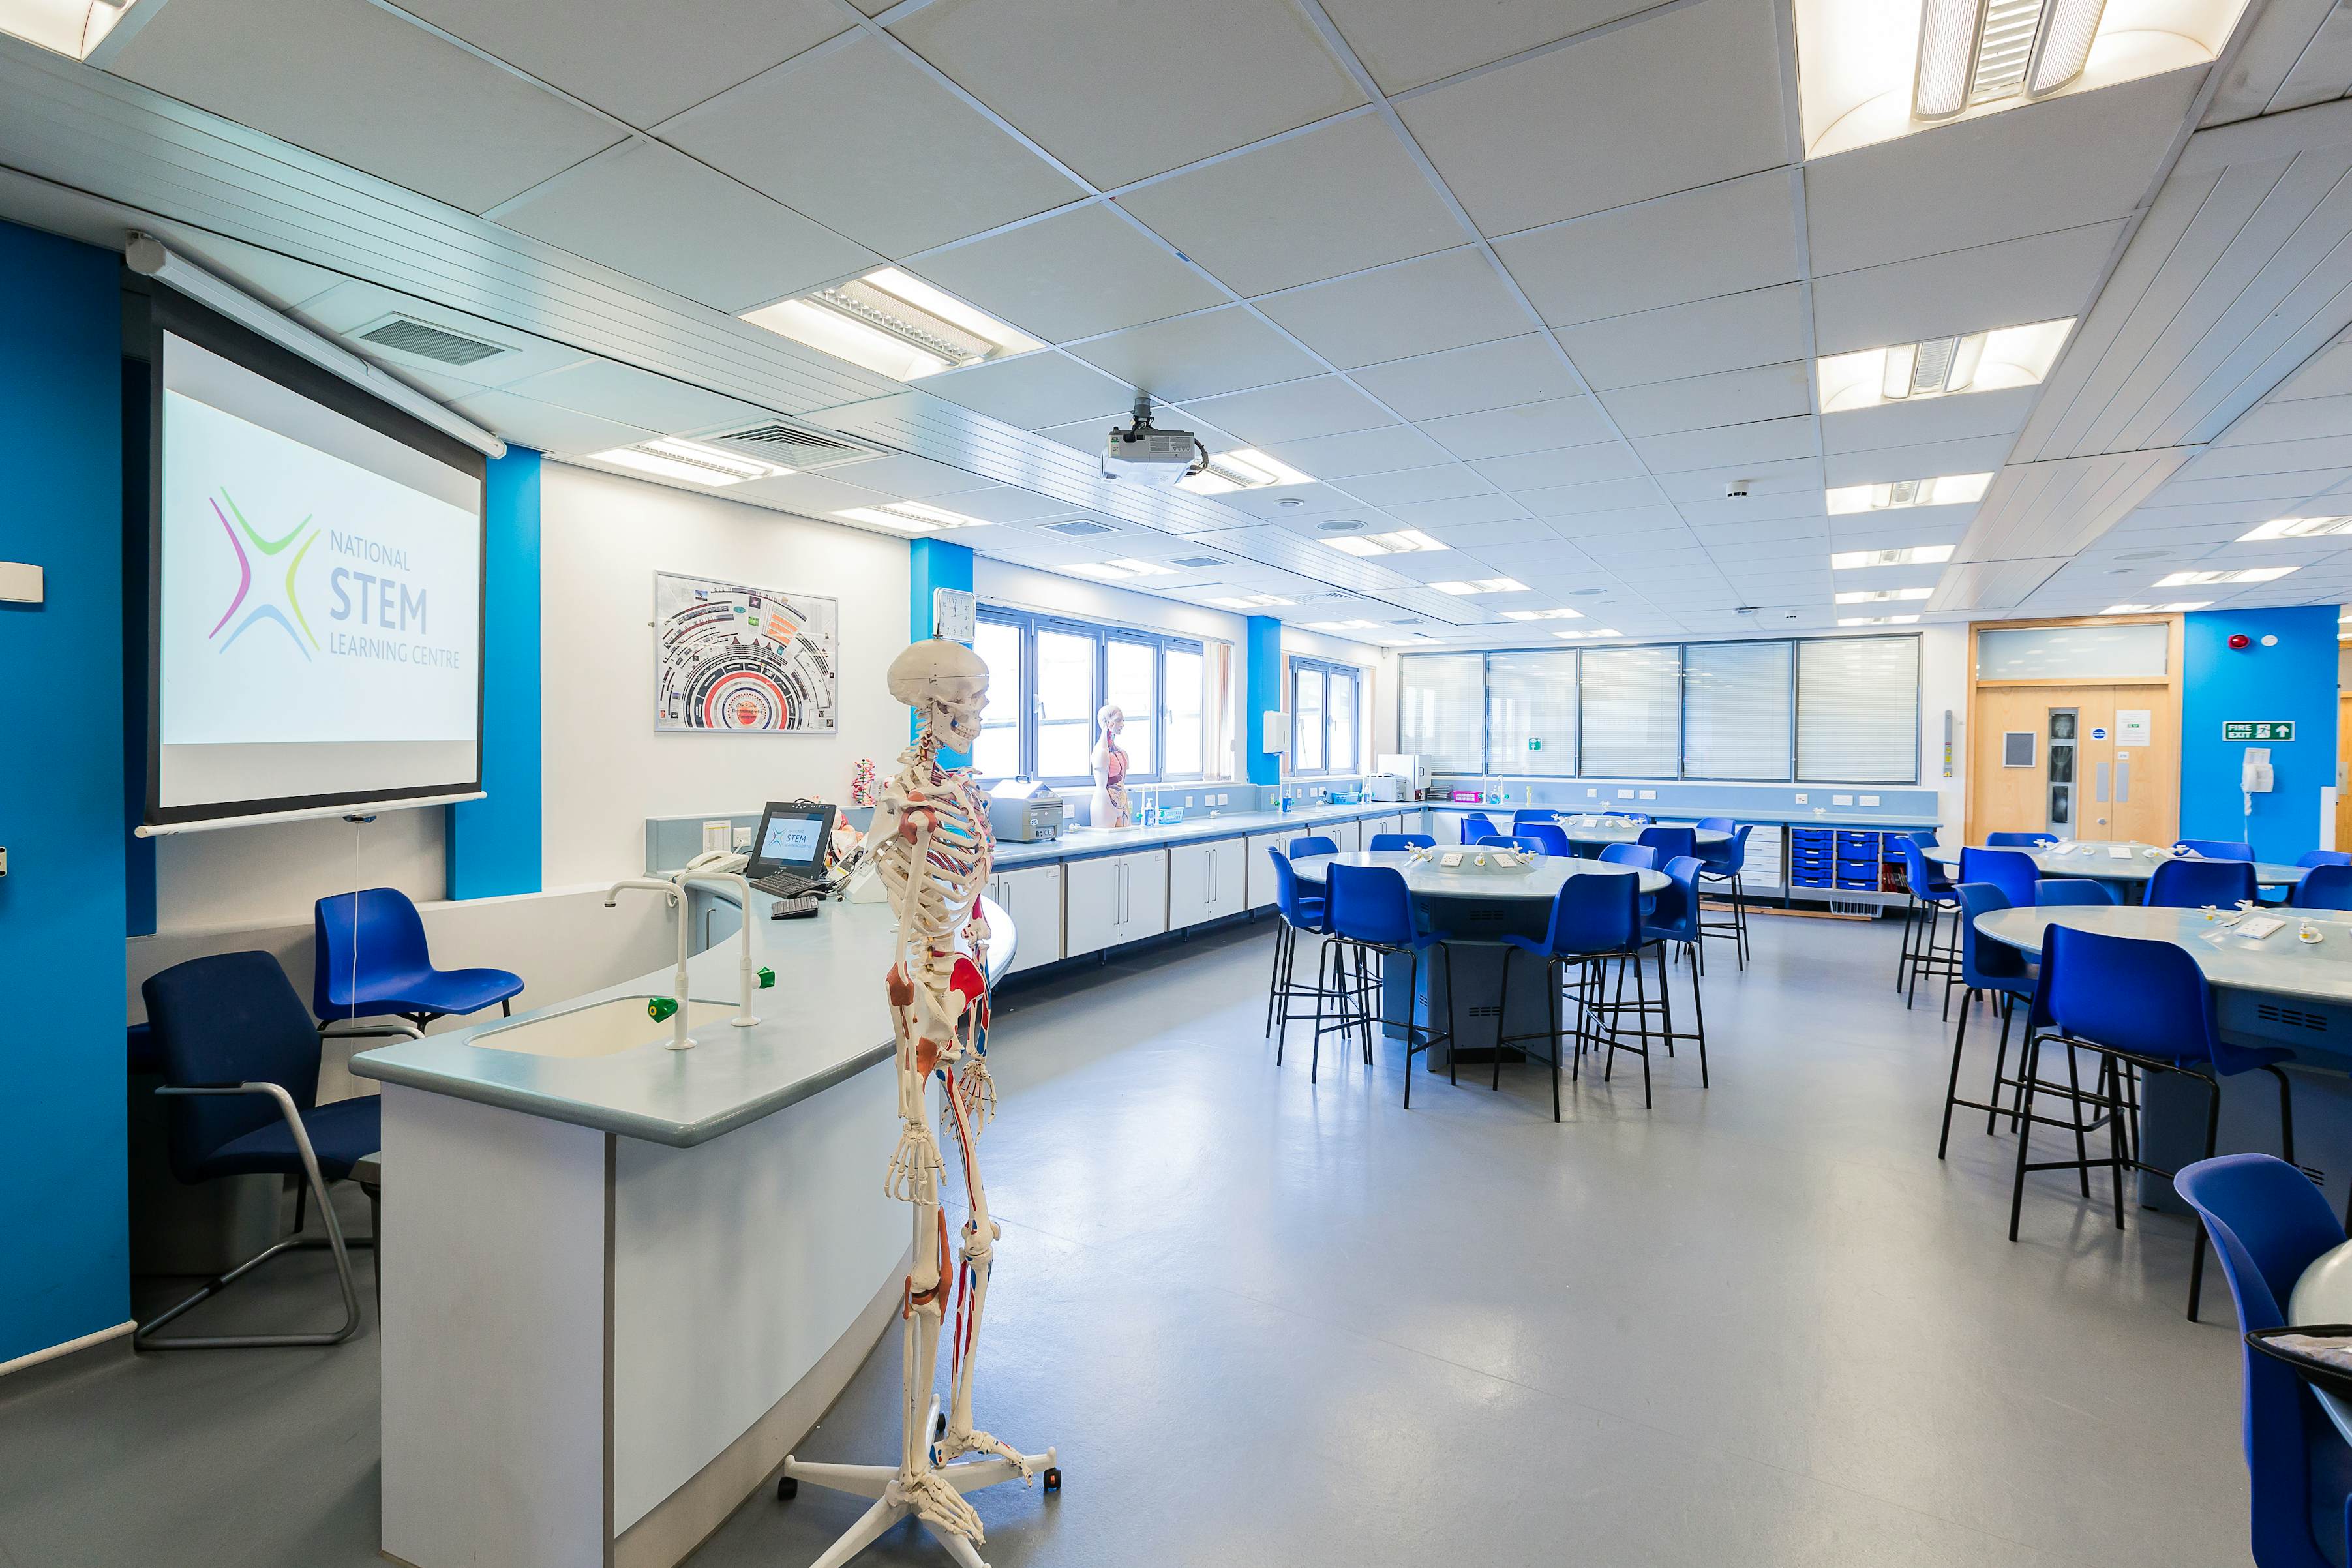 National STEM Learning Centre - Laboratories image 1